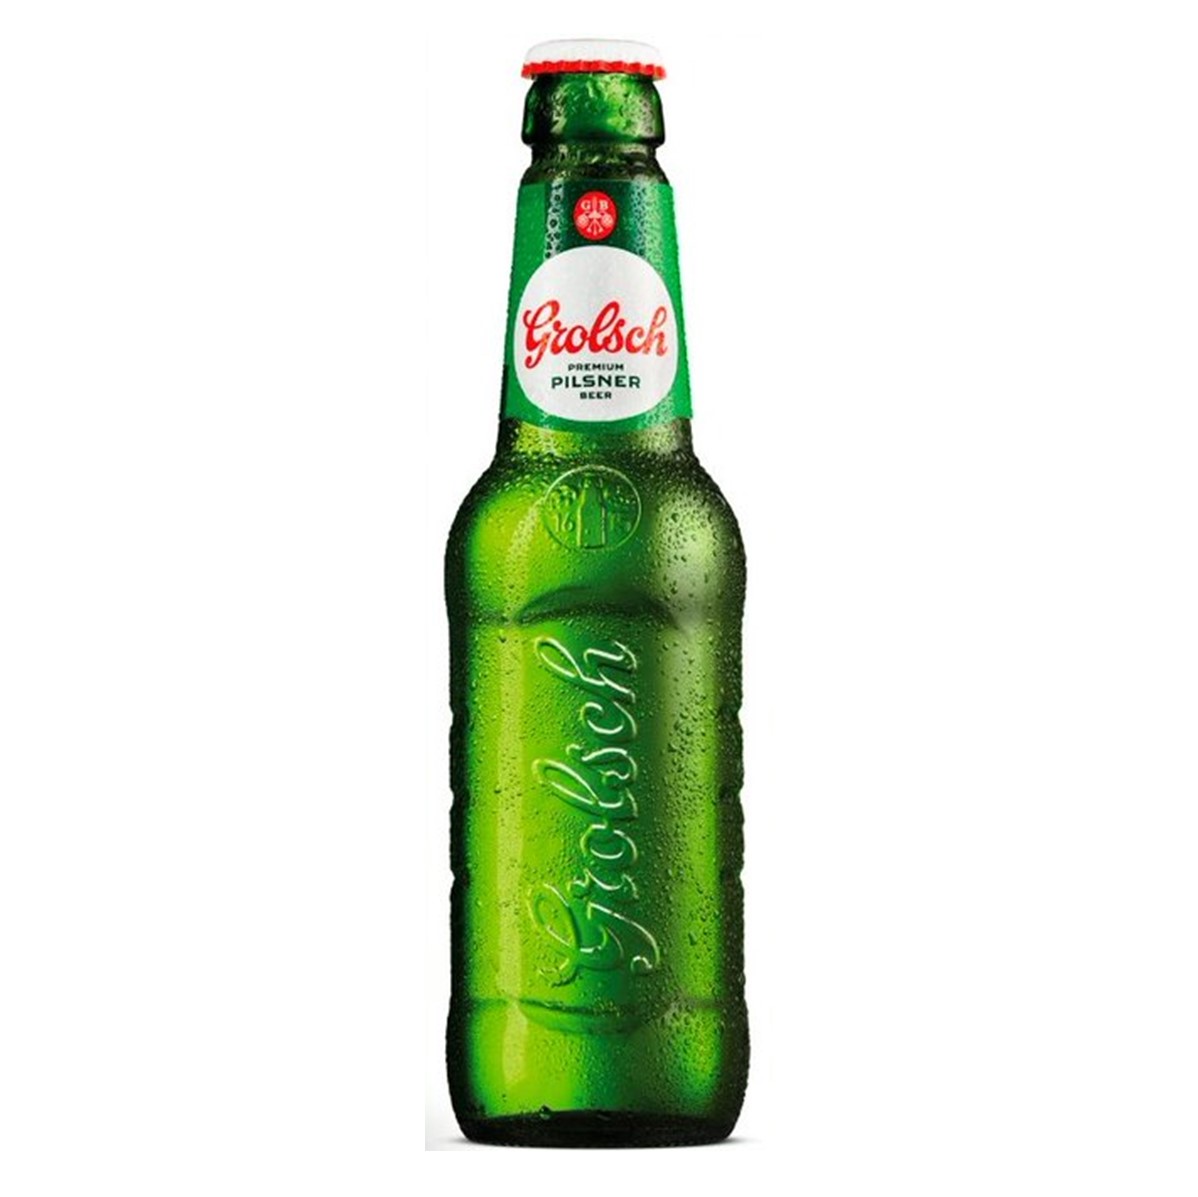 Grolsch Premium Pilsner - 24x330ml bottles